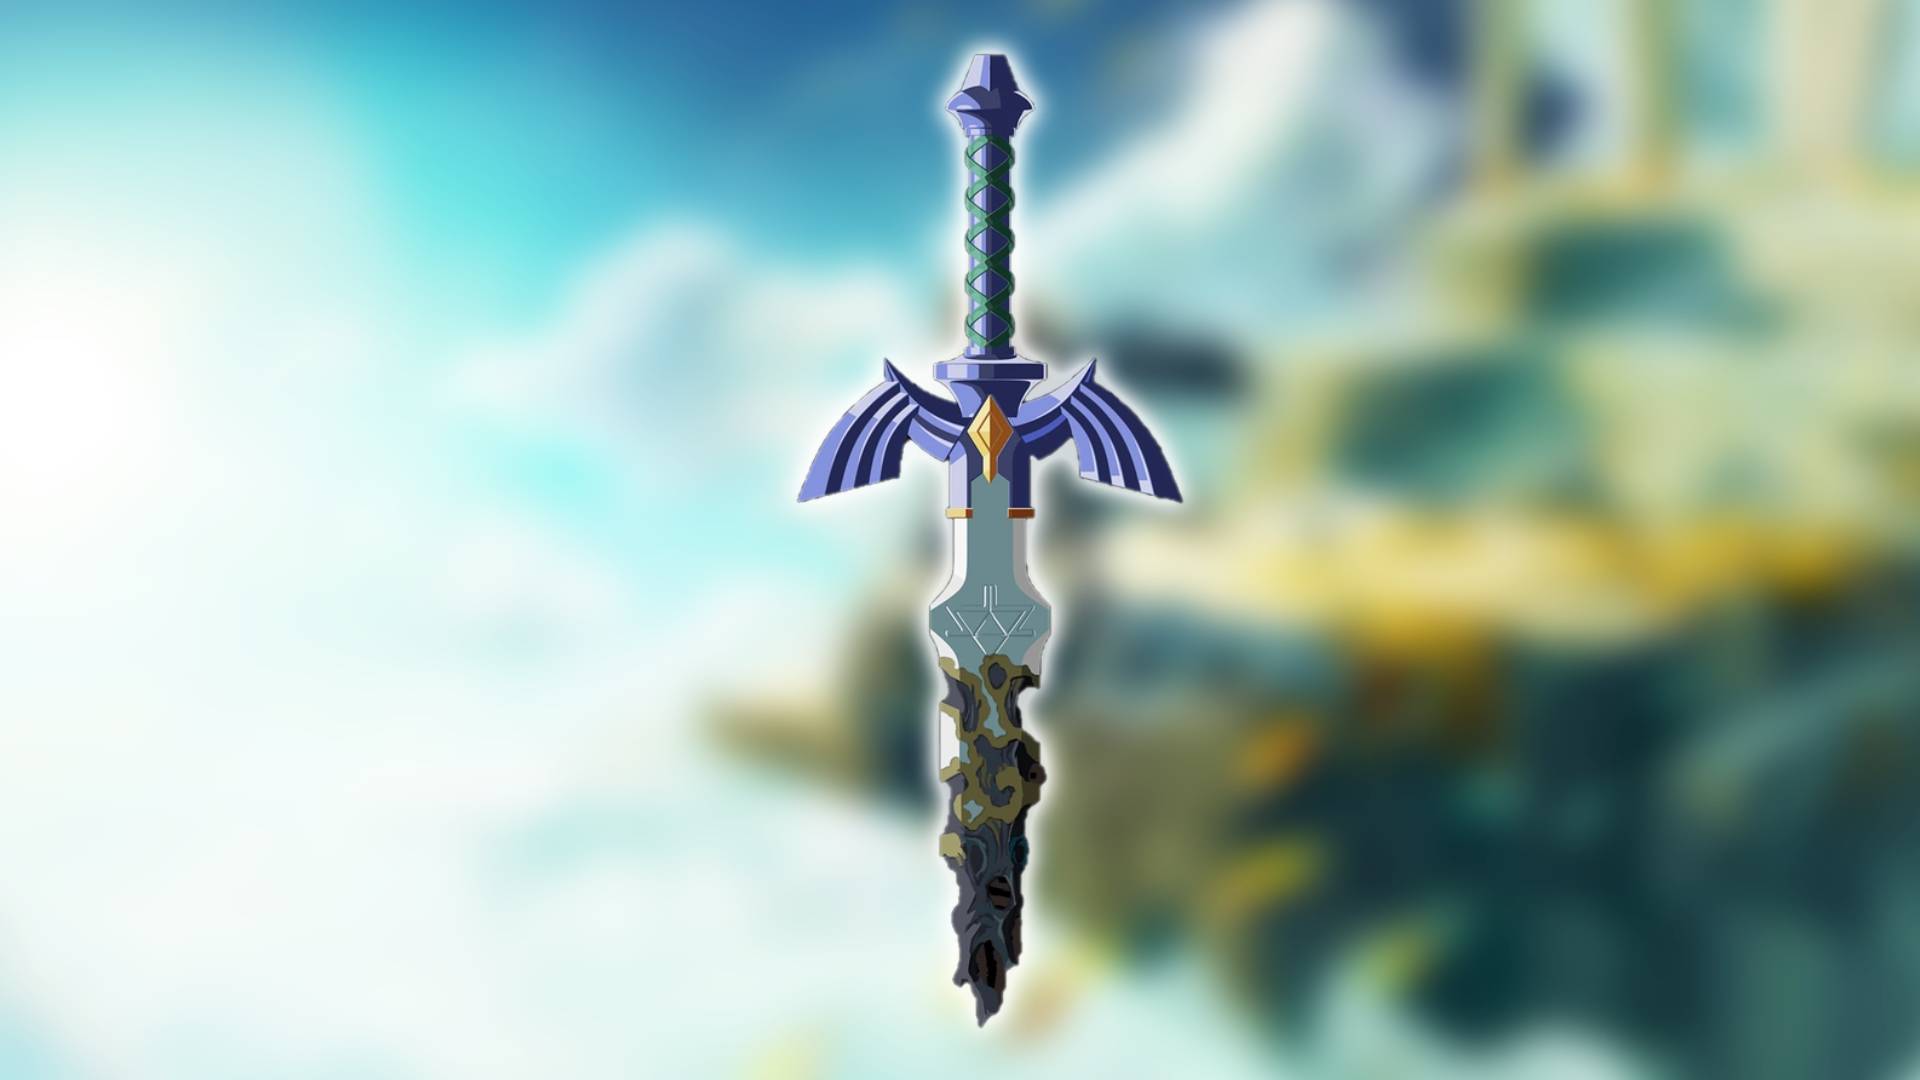 Legend Of Zelda: Breath Of The Wild - How To Find The Master Sword